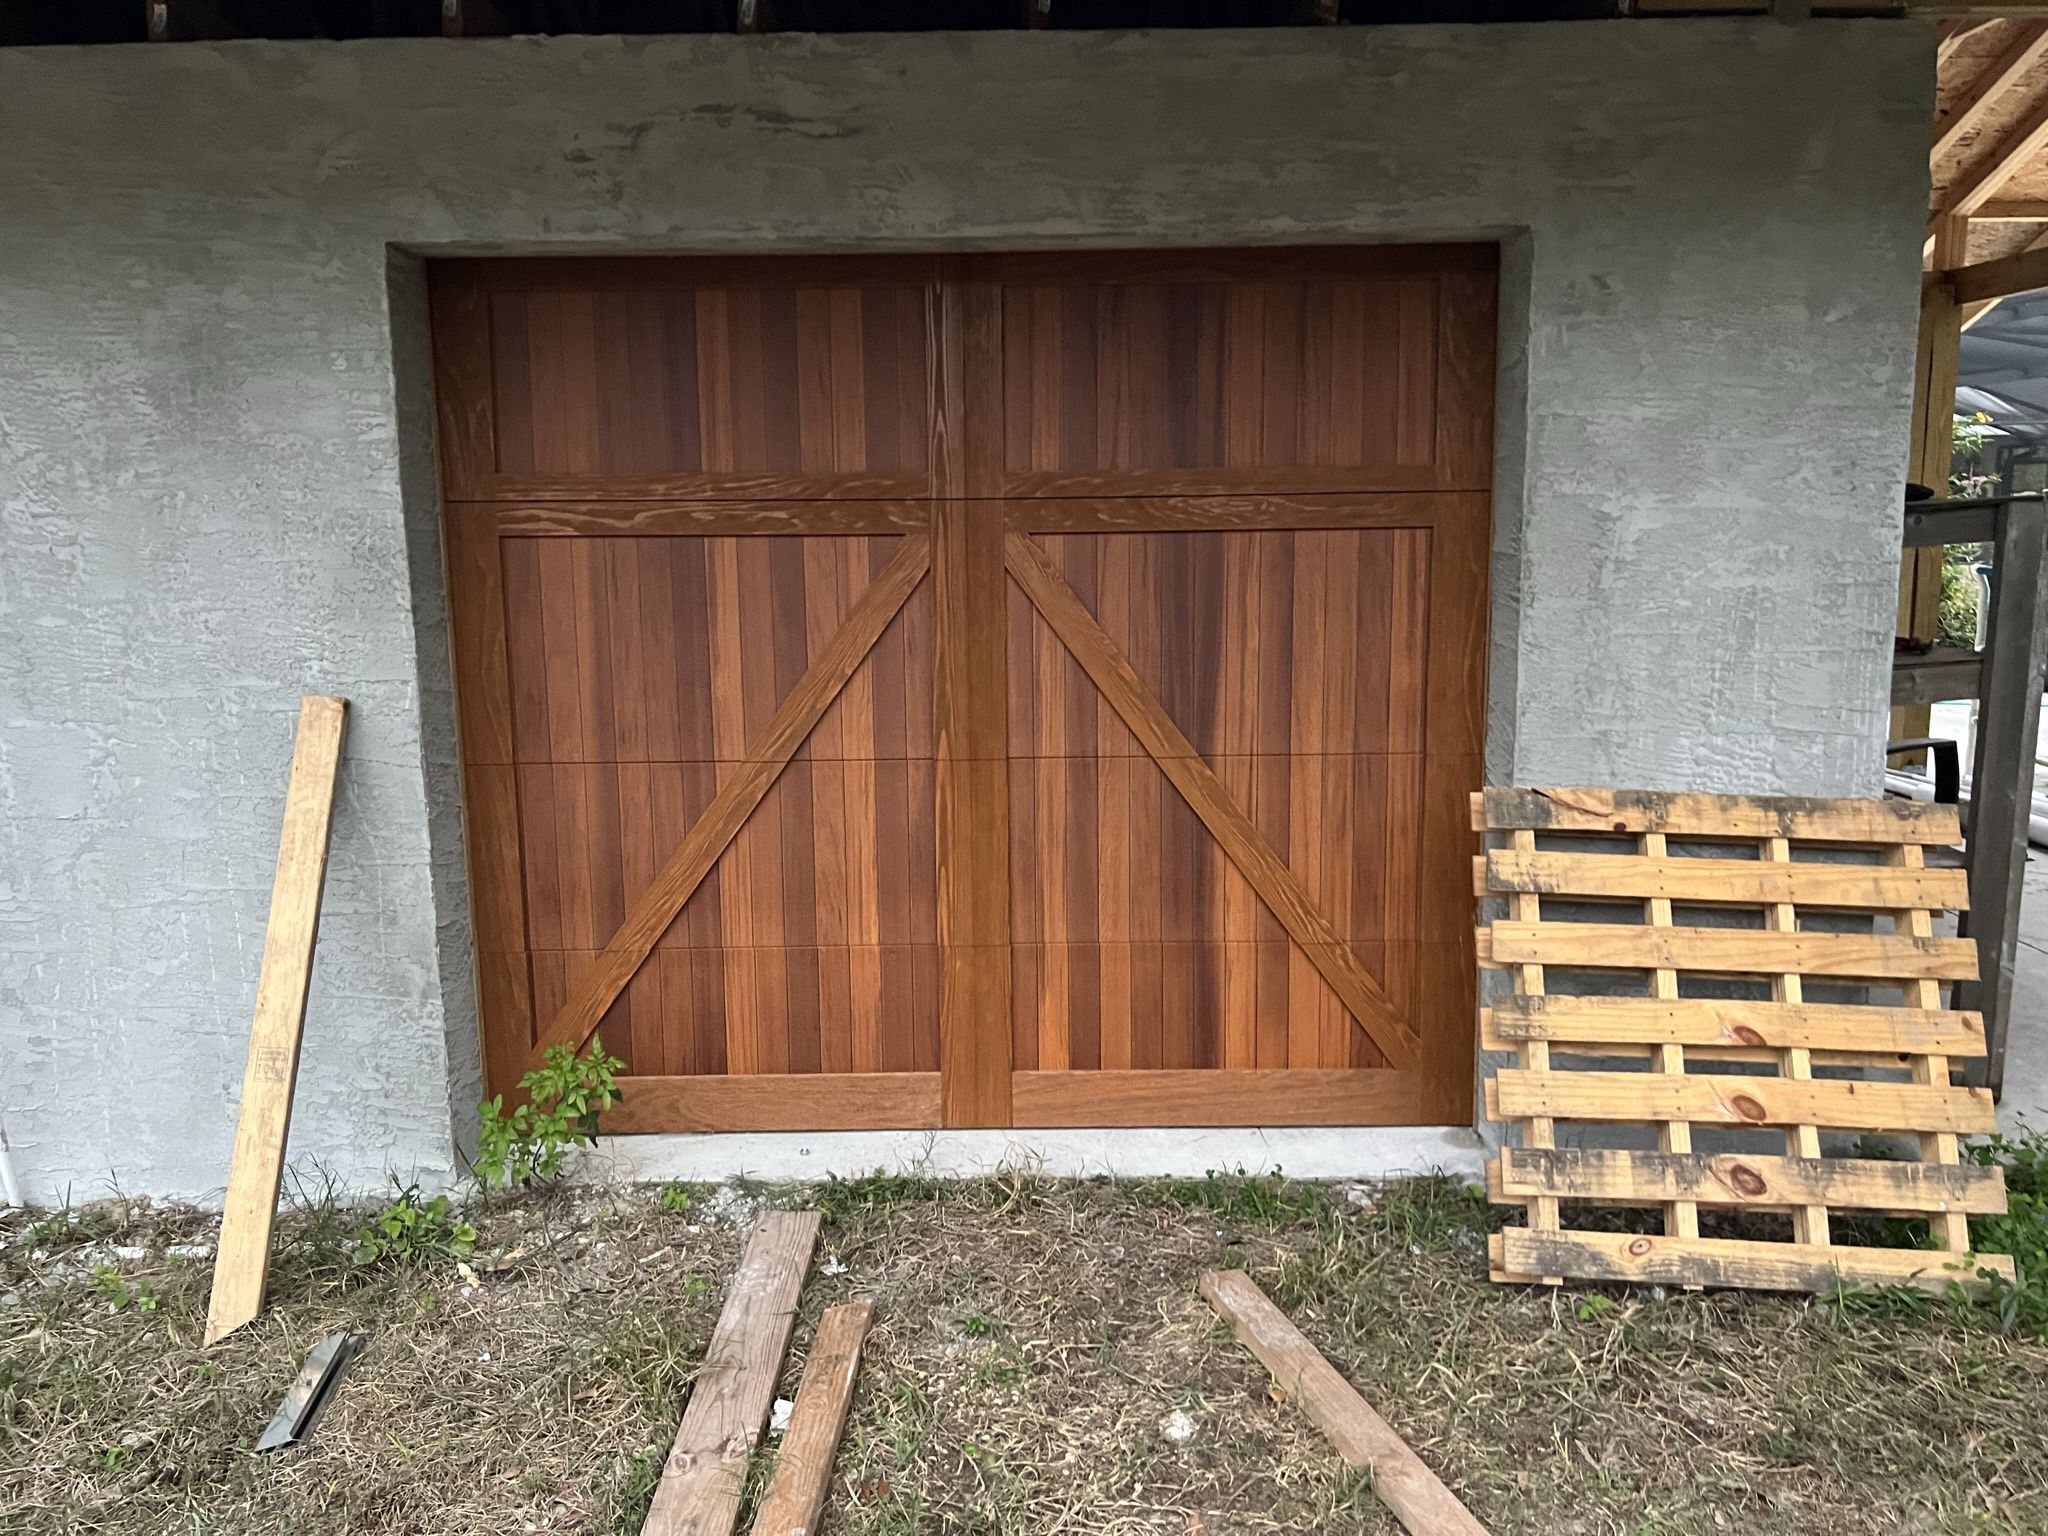 Garage Door All Sizes , All Styles New !